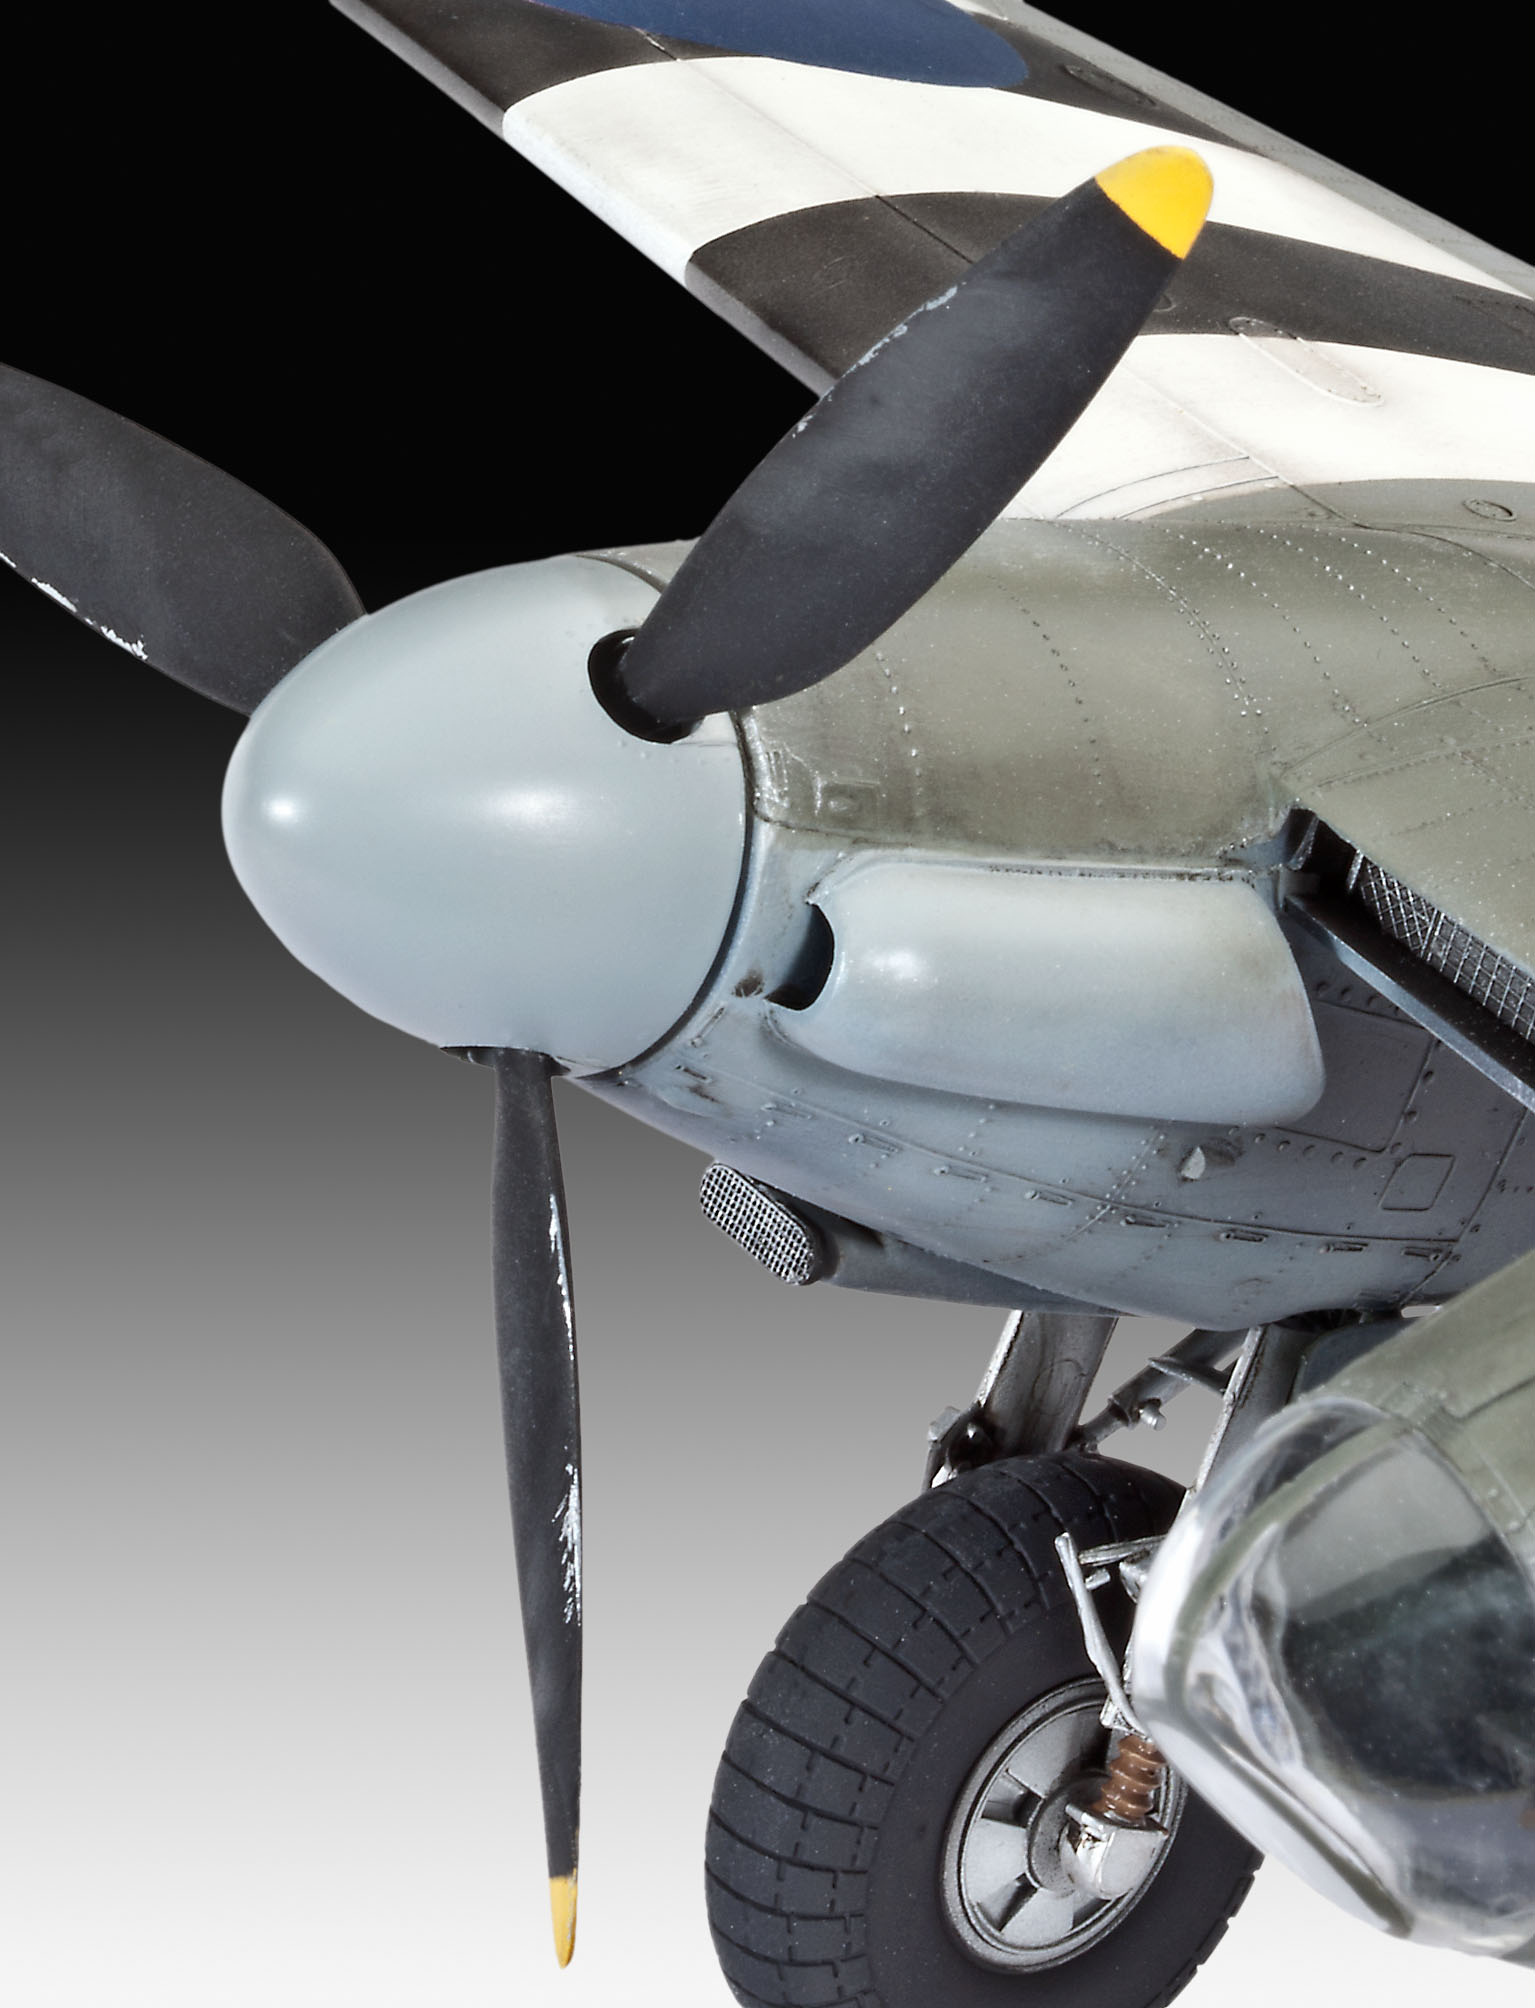 1:32  Mosquito Mk.IV - De Havilland Mosquito MK.IV